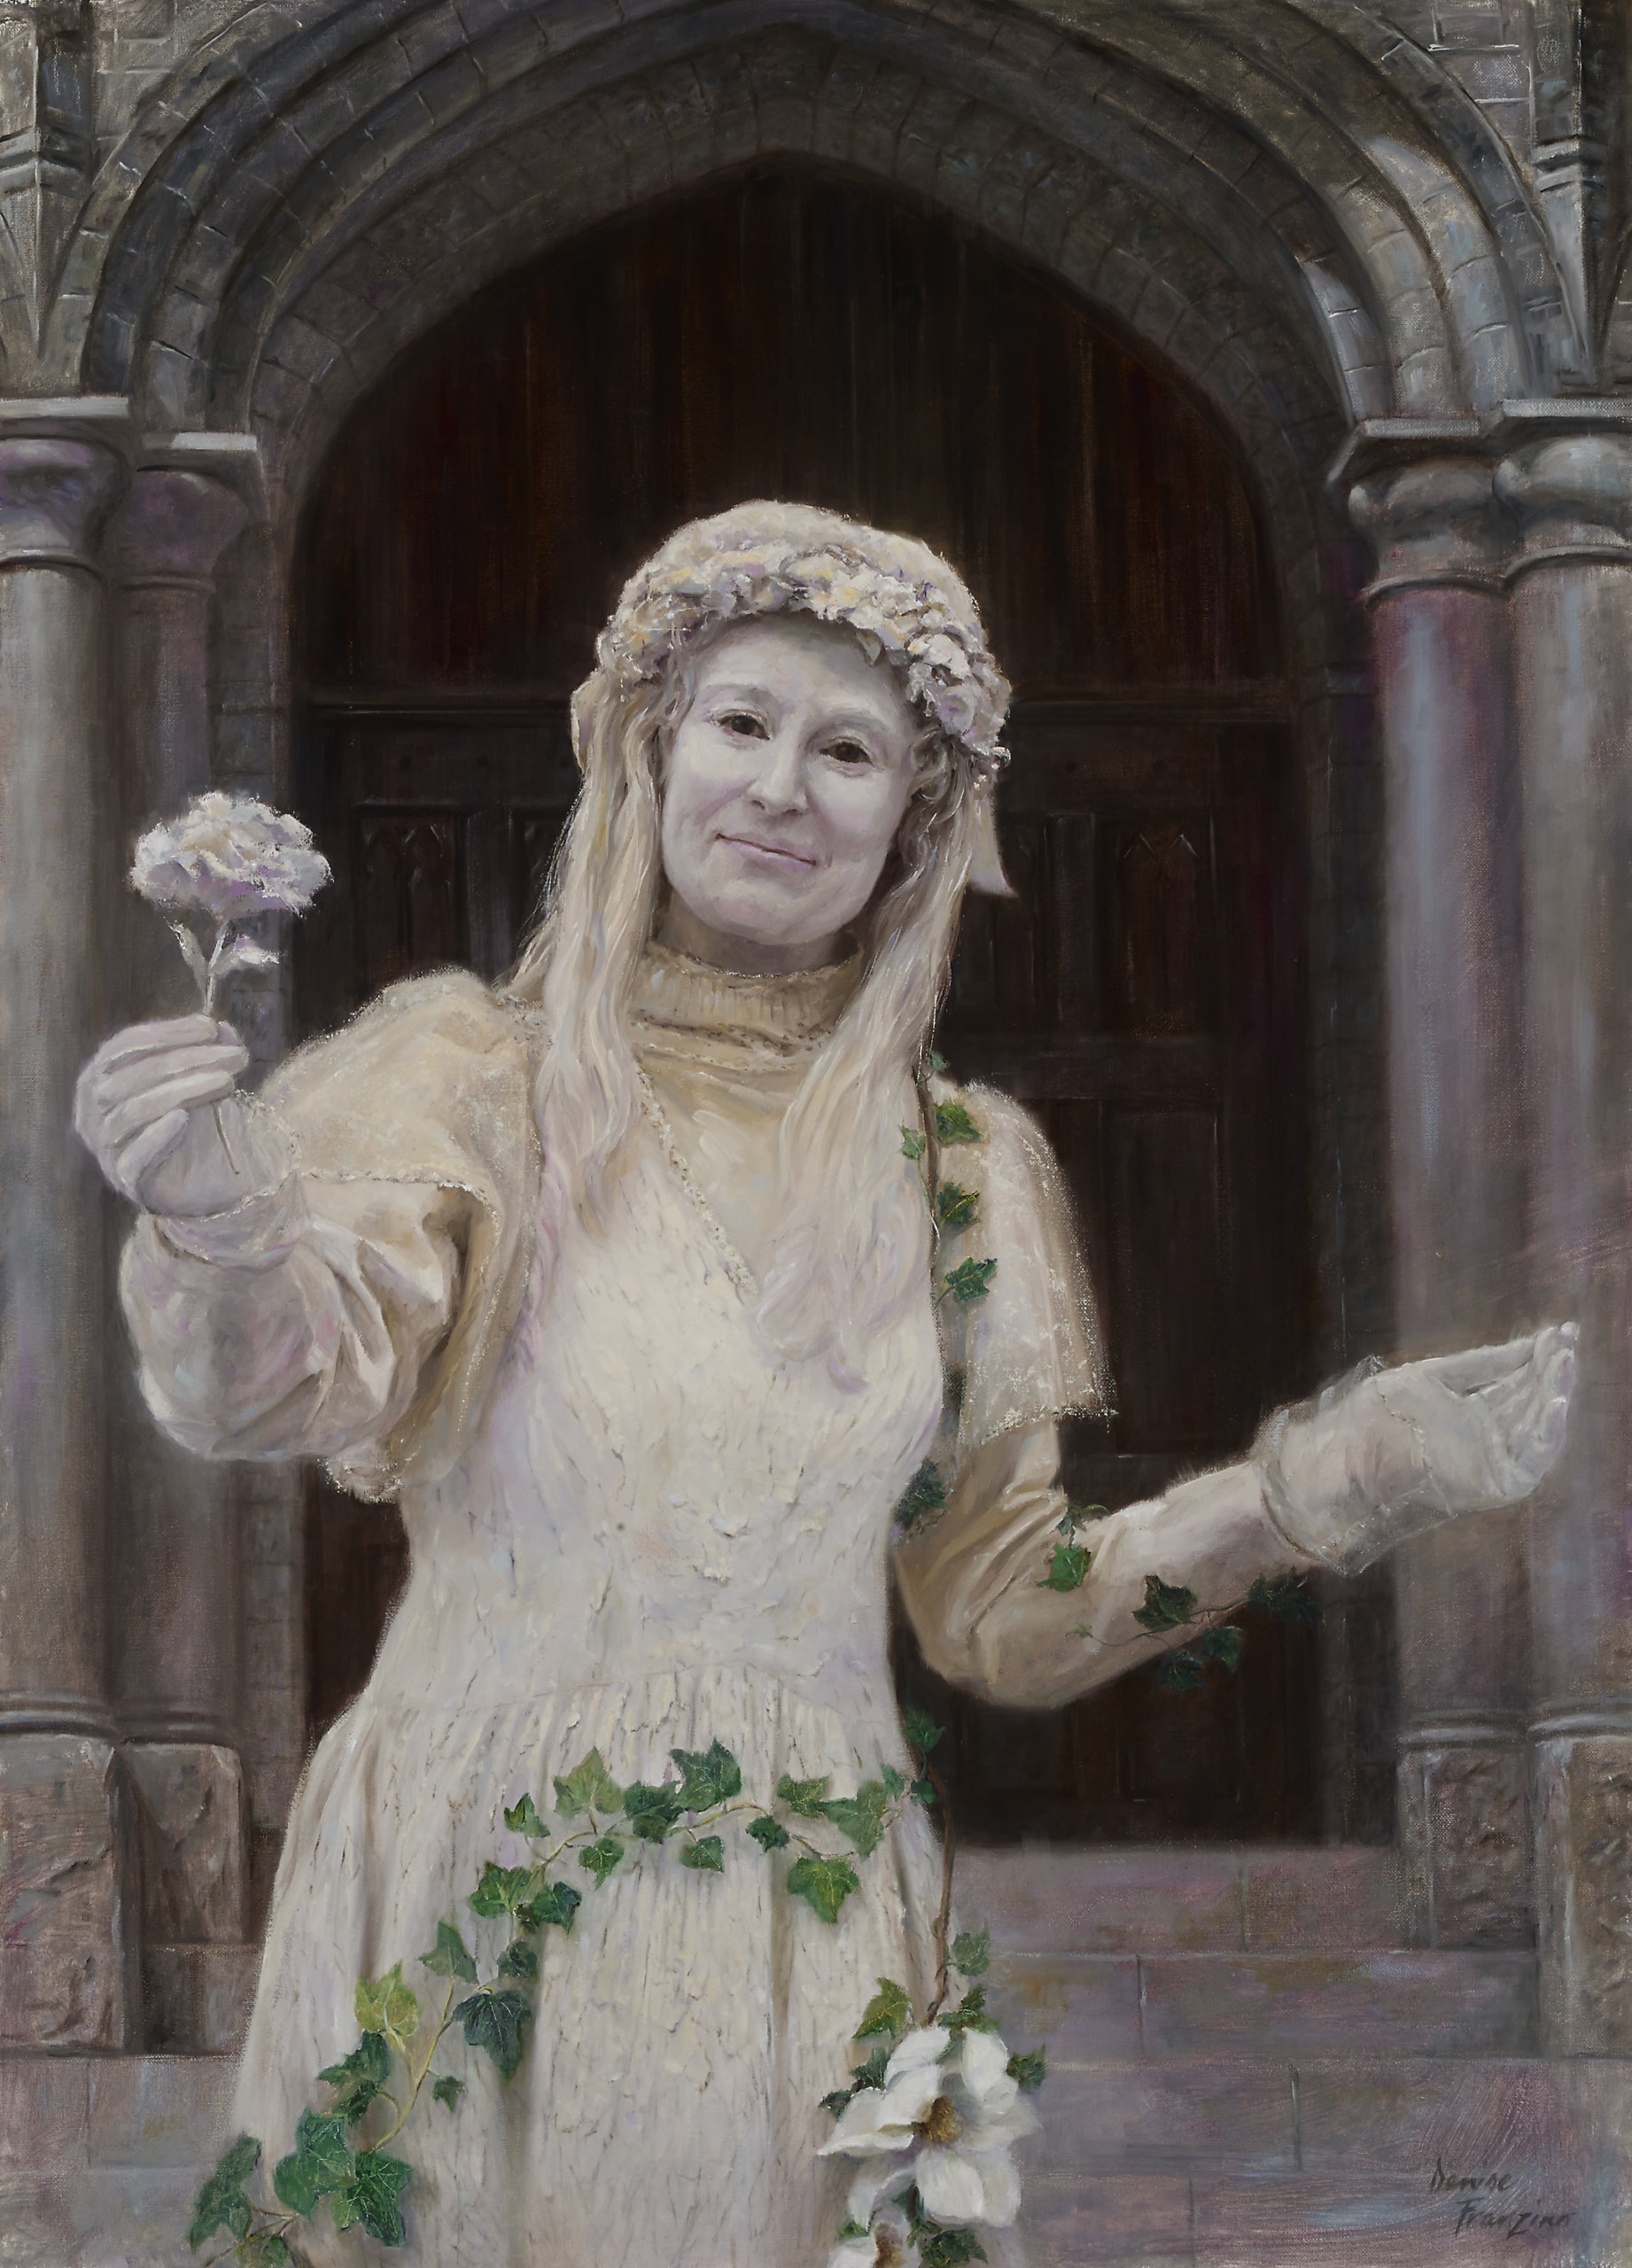 Denise Franzino's "White Bride of Edinburgh"